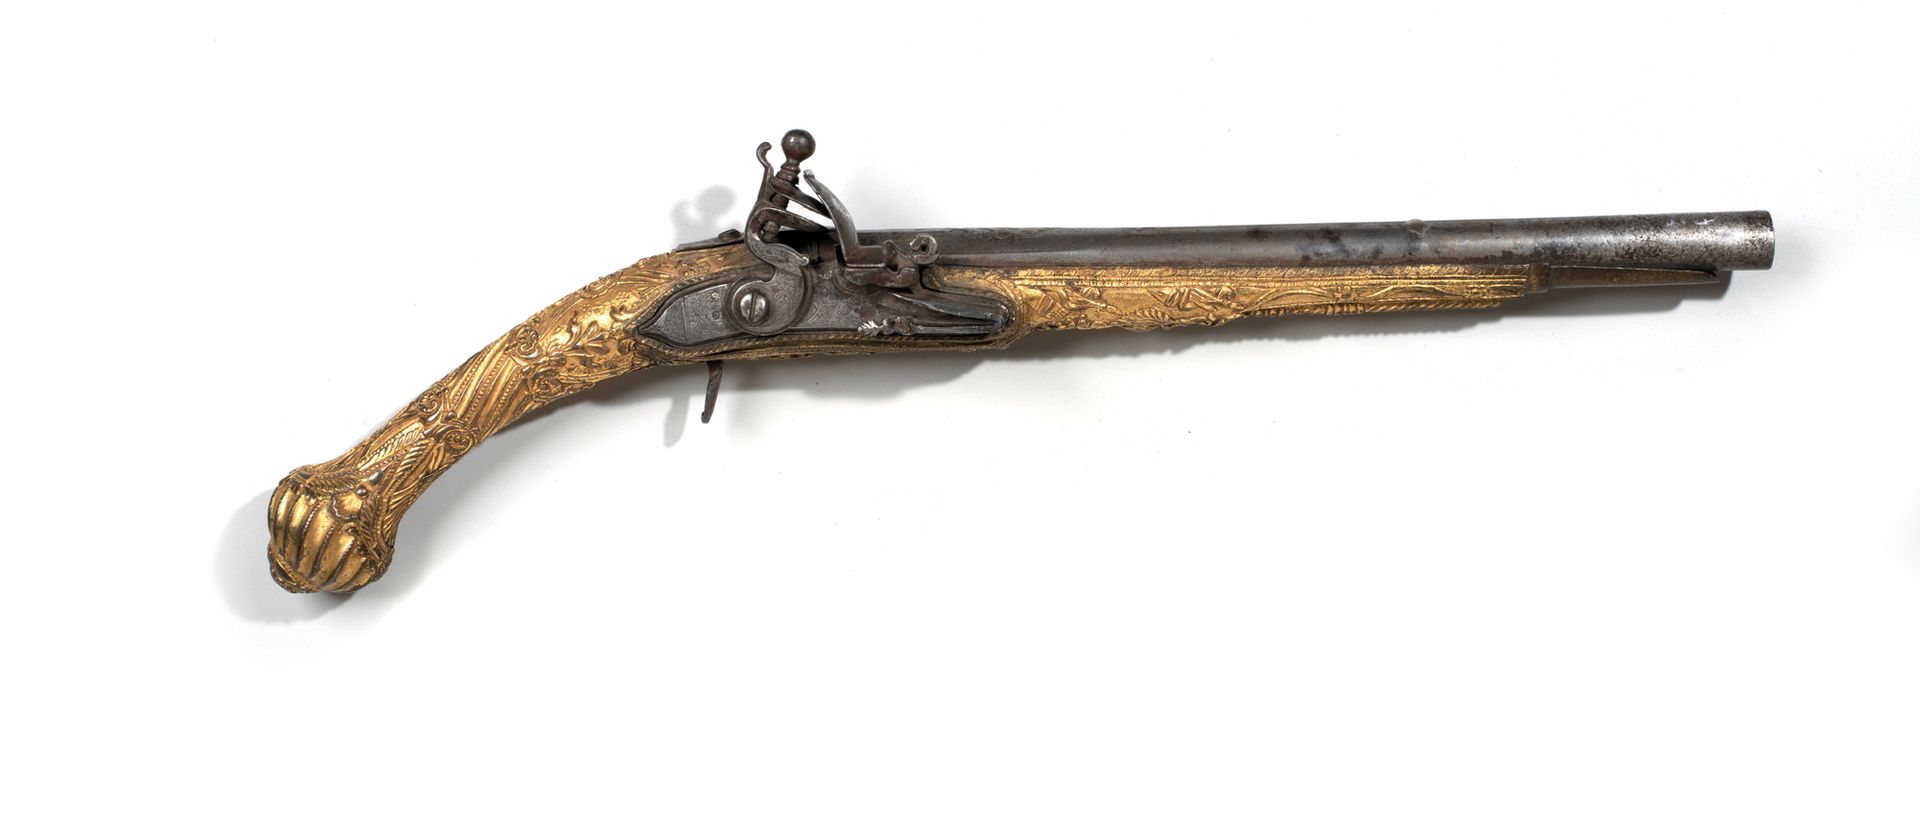 Null Pistola otomana
Mundo otomano, siglos XVIII-XIX.
Longitud: 50 cm.
La culata&hellip;